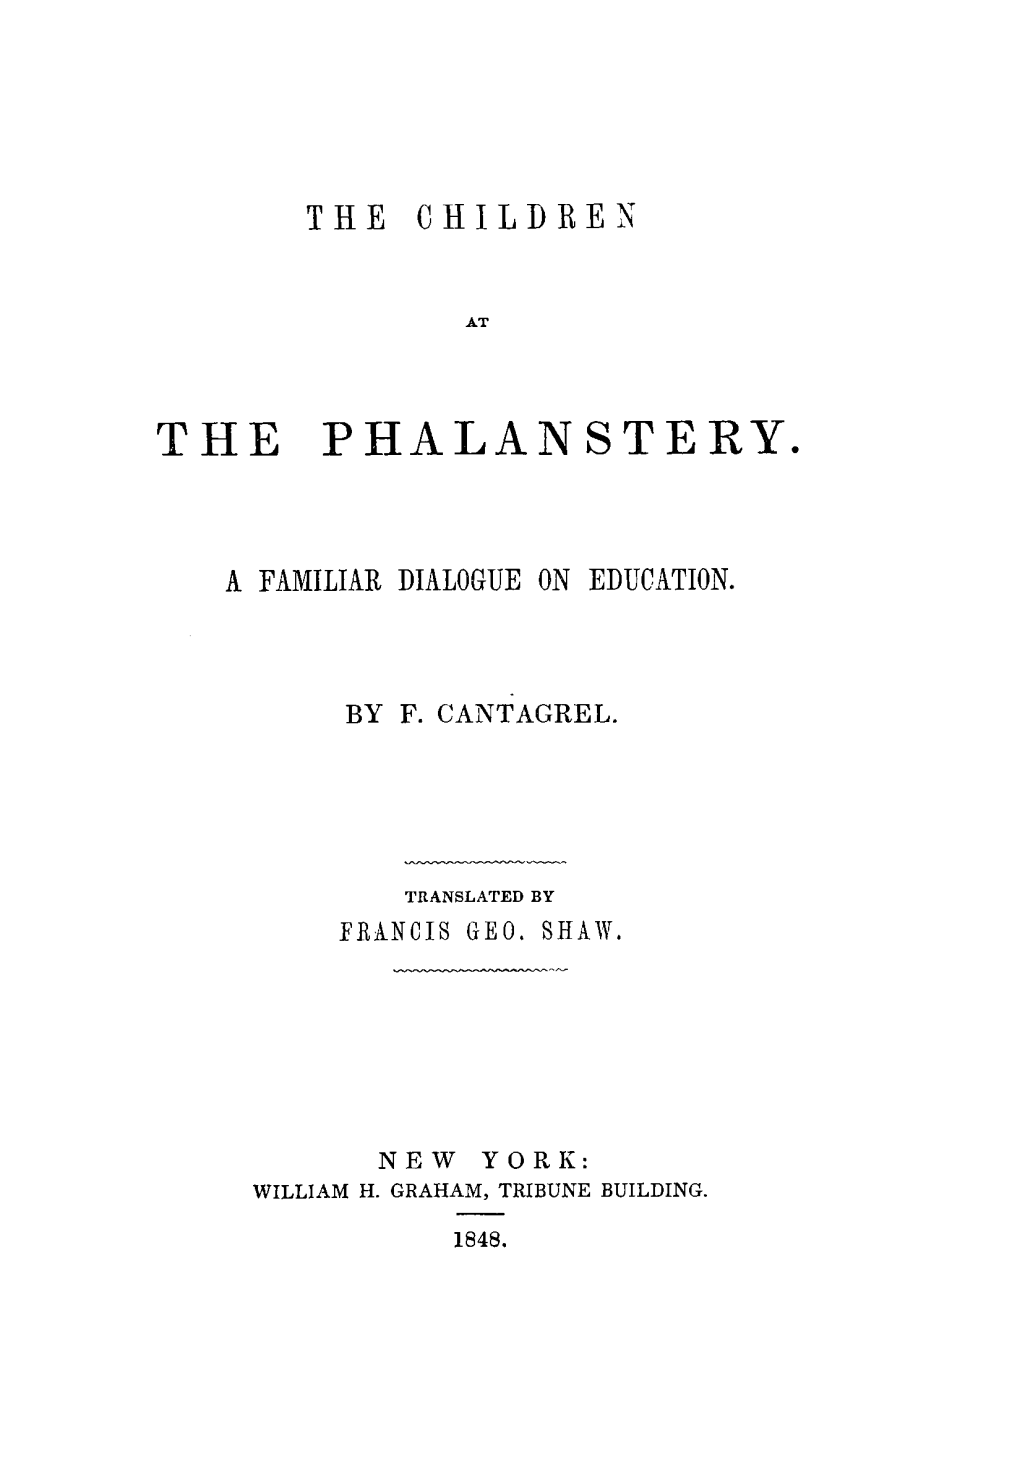 The Phalanstery